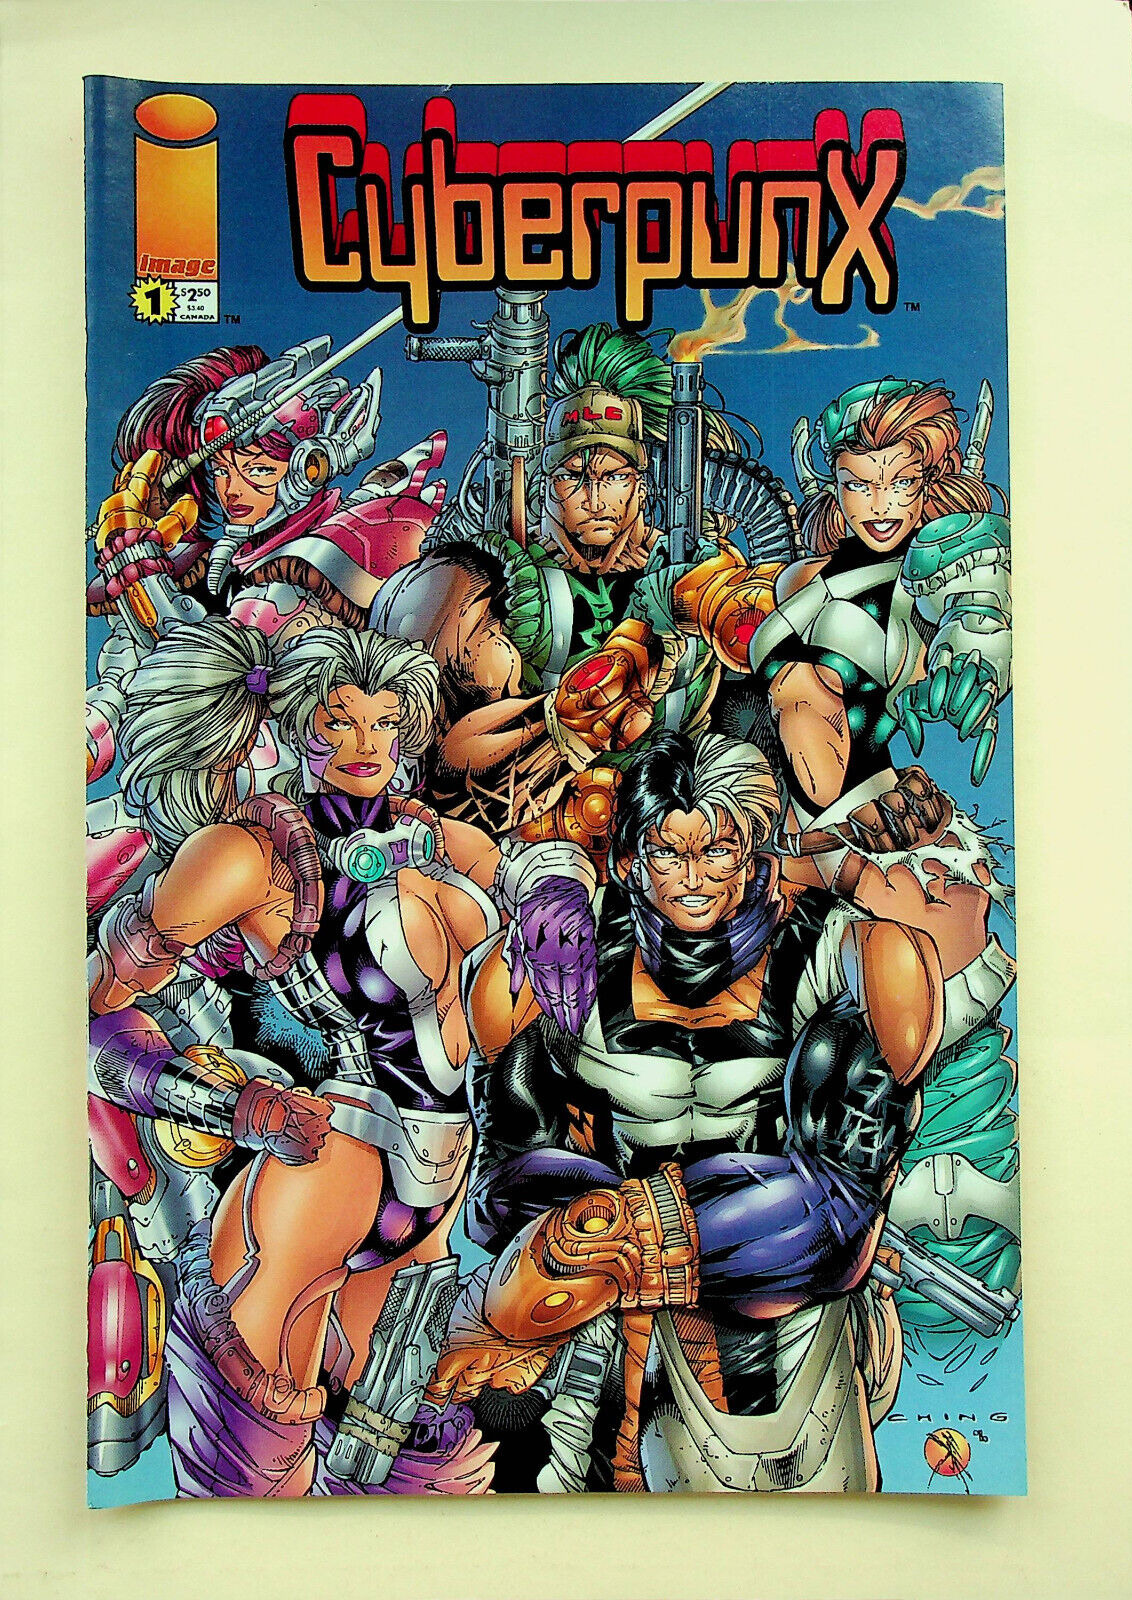 Cyberpunx #1 (Mar 1996, Image) - Near Mint